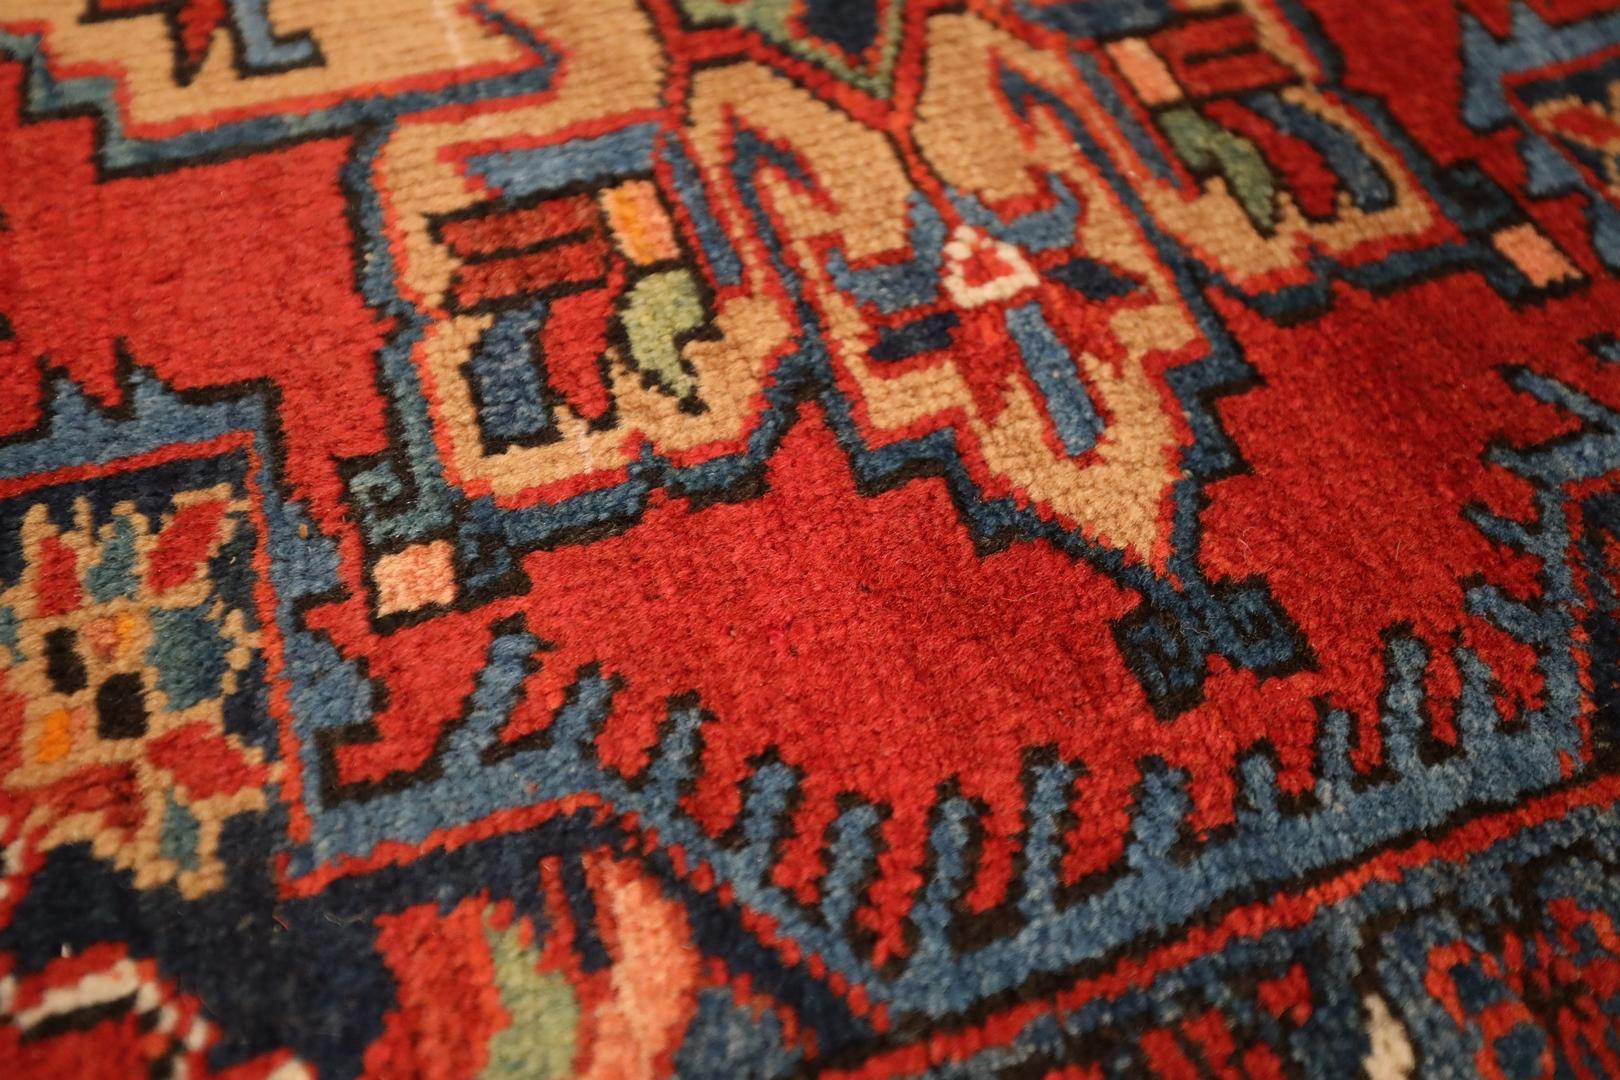 N.W. Persian Semi-Antique rug, Red Beige Sea-Green - 3'2